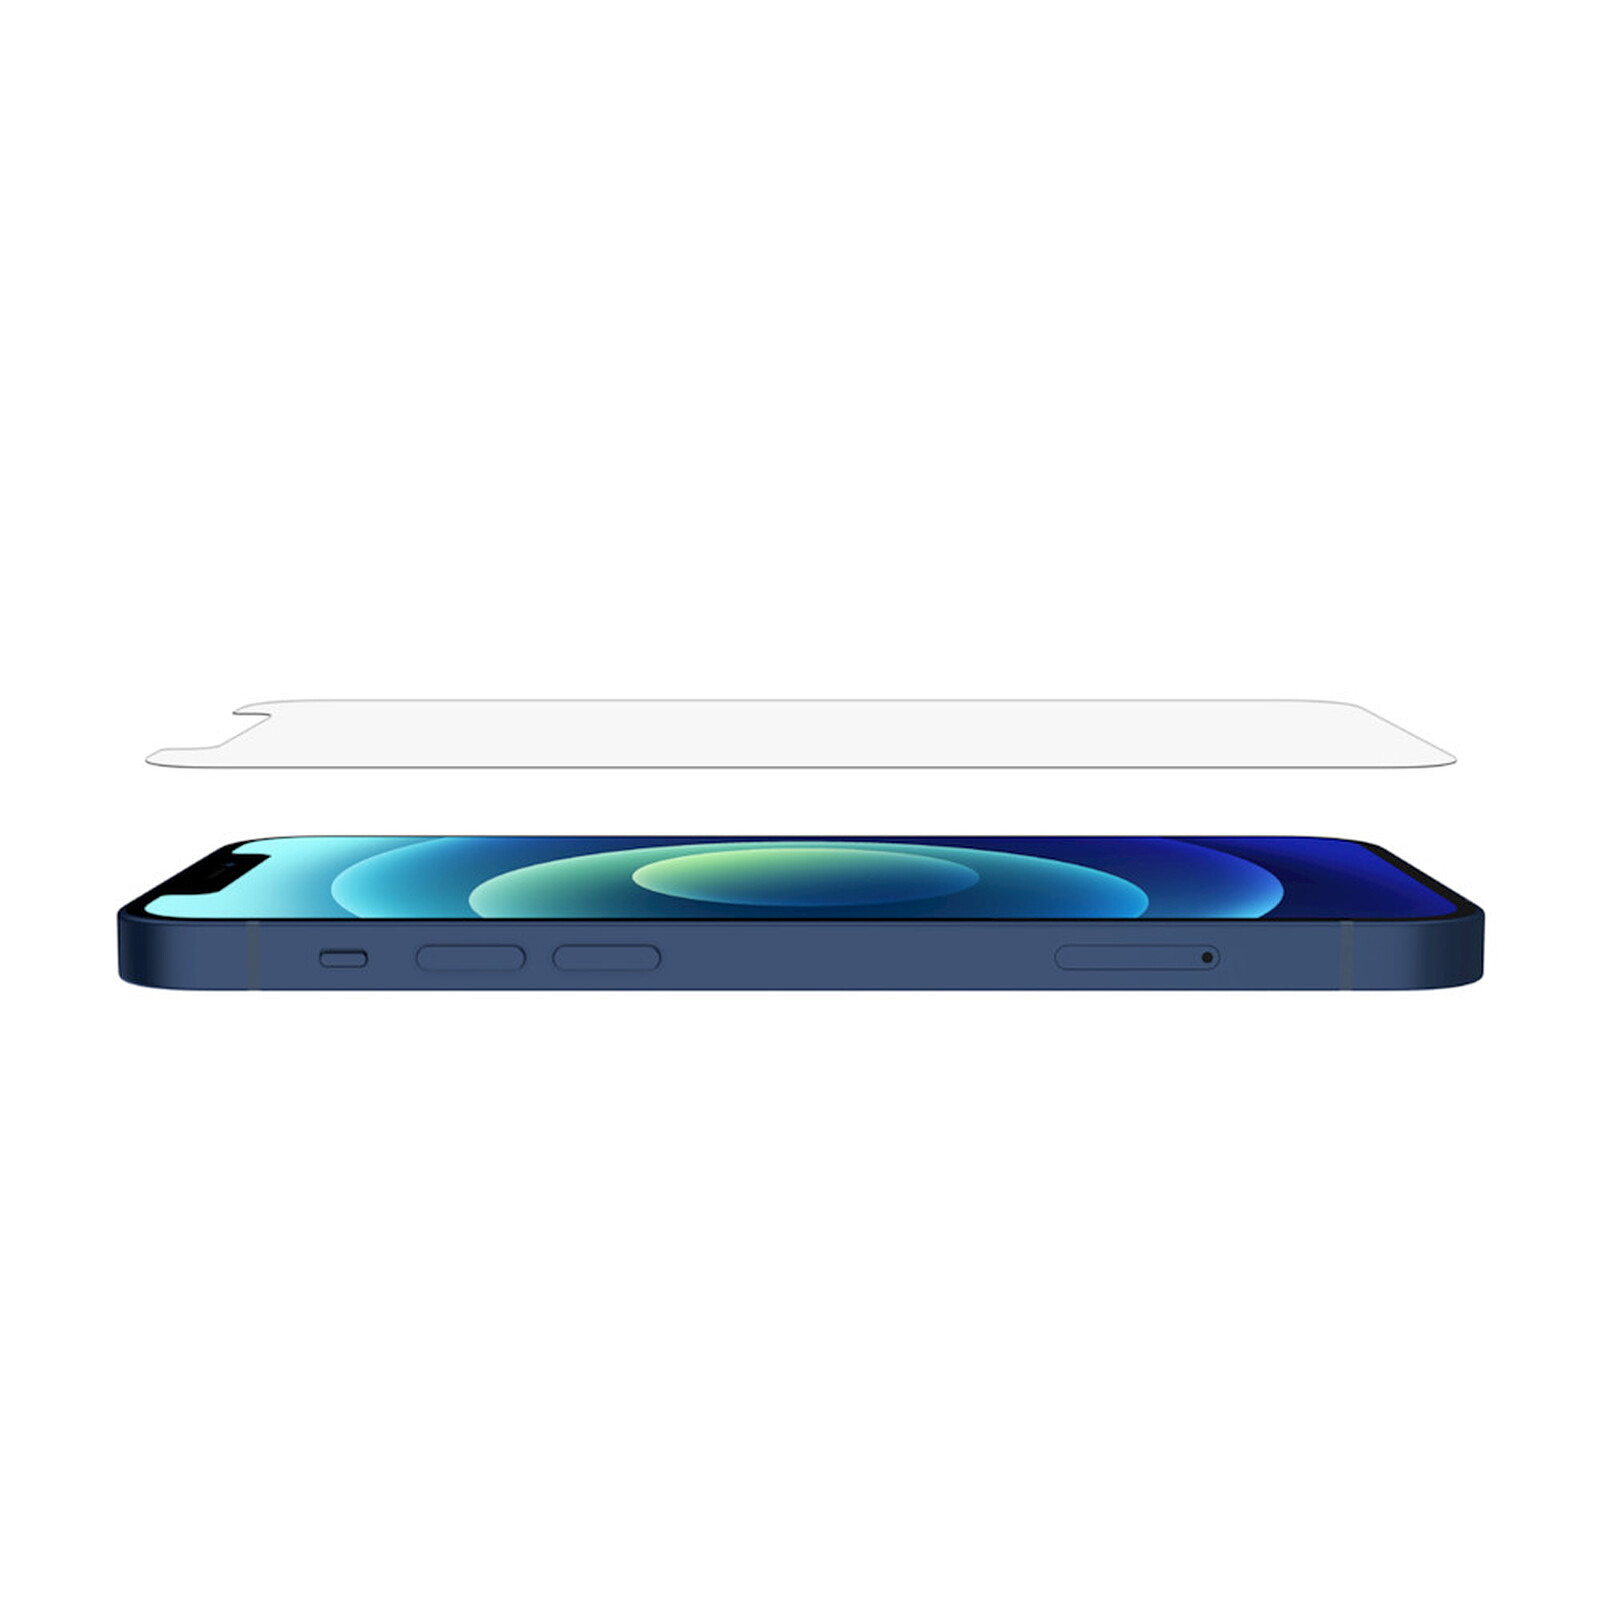 Protège-écran en verre UltraGlass de Belkin pour iPhone 13 mini - Apple (CH)